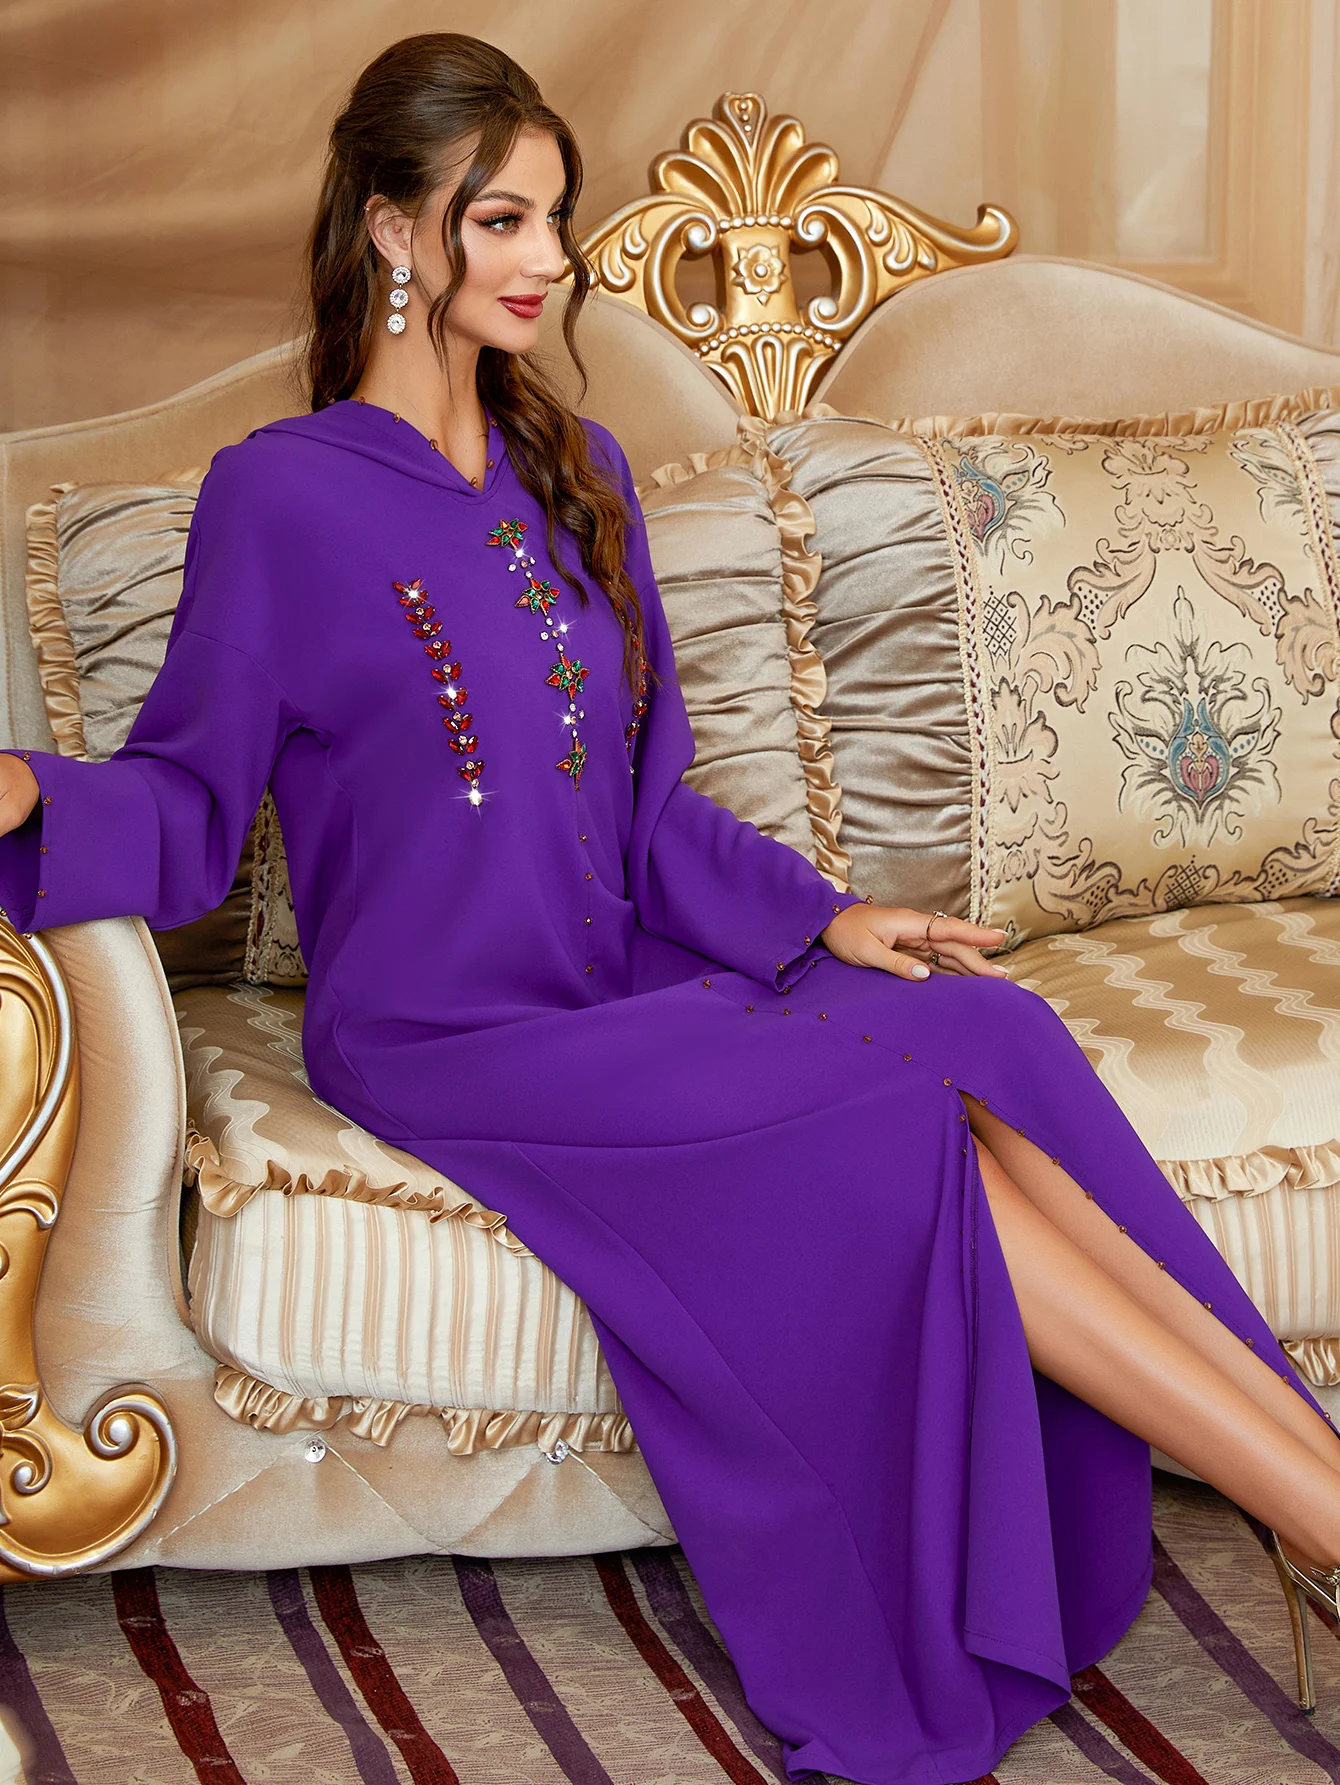 

BA303 dark purple hooded hand sewn drill women's gown dress